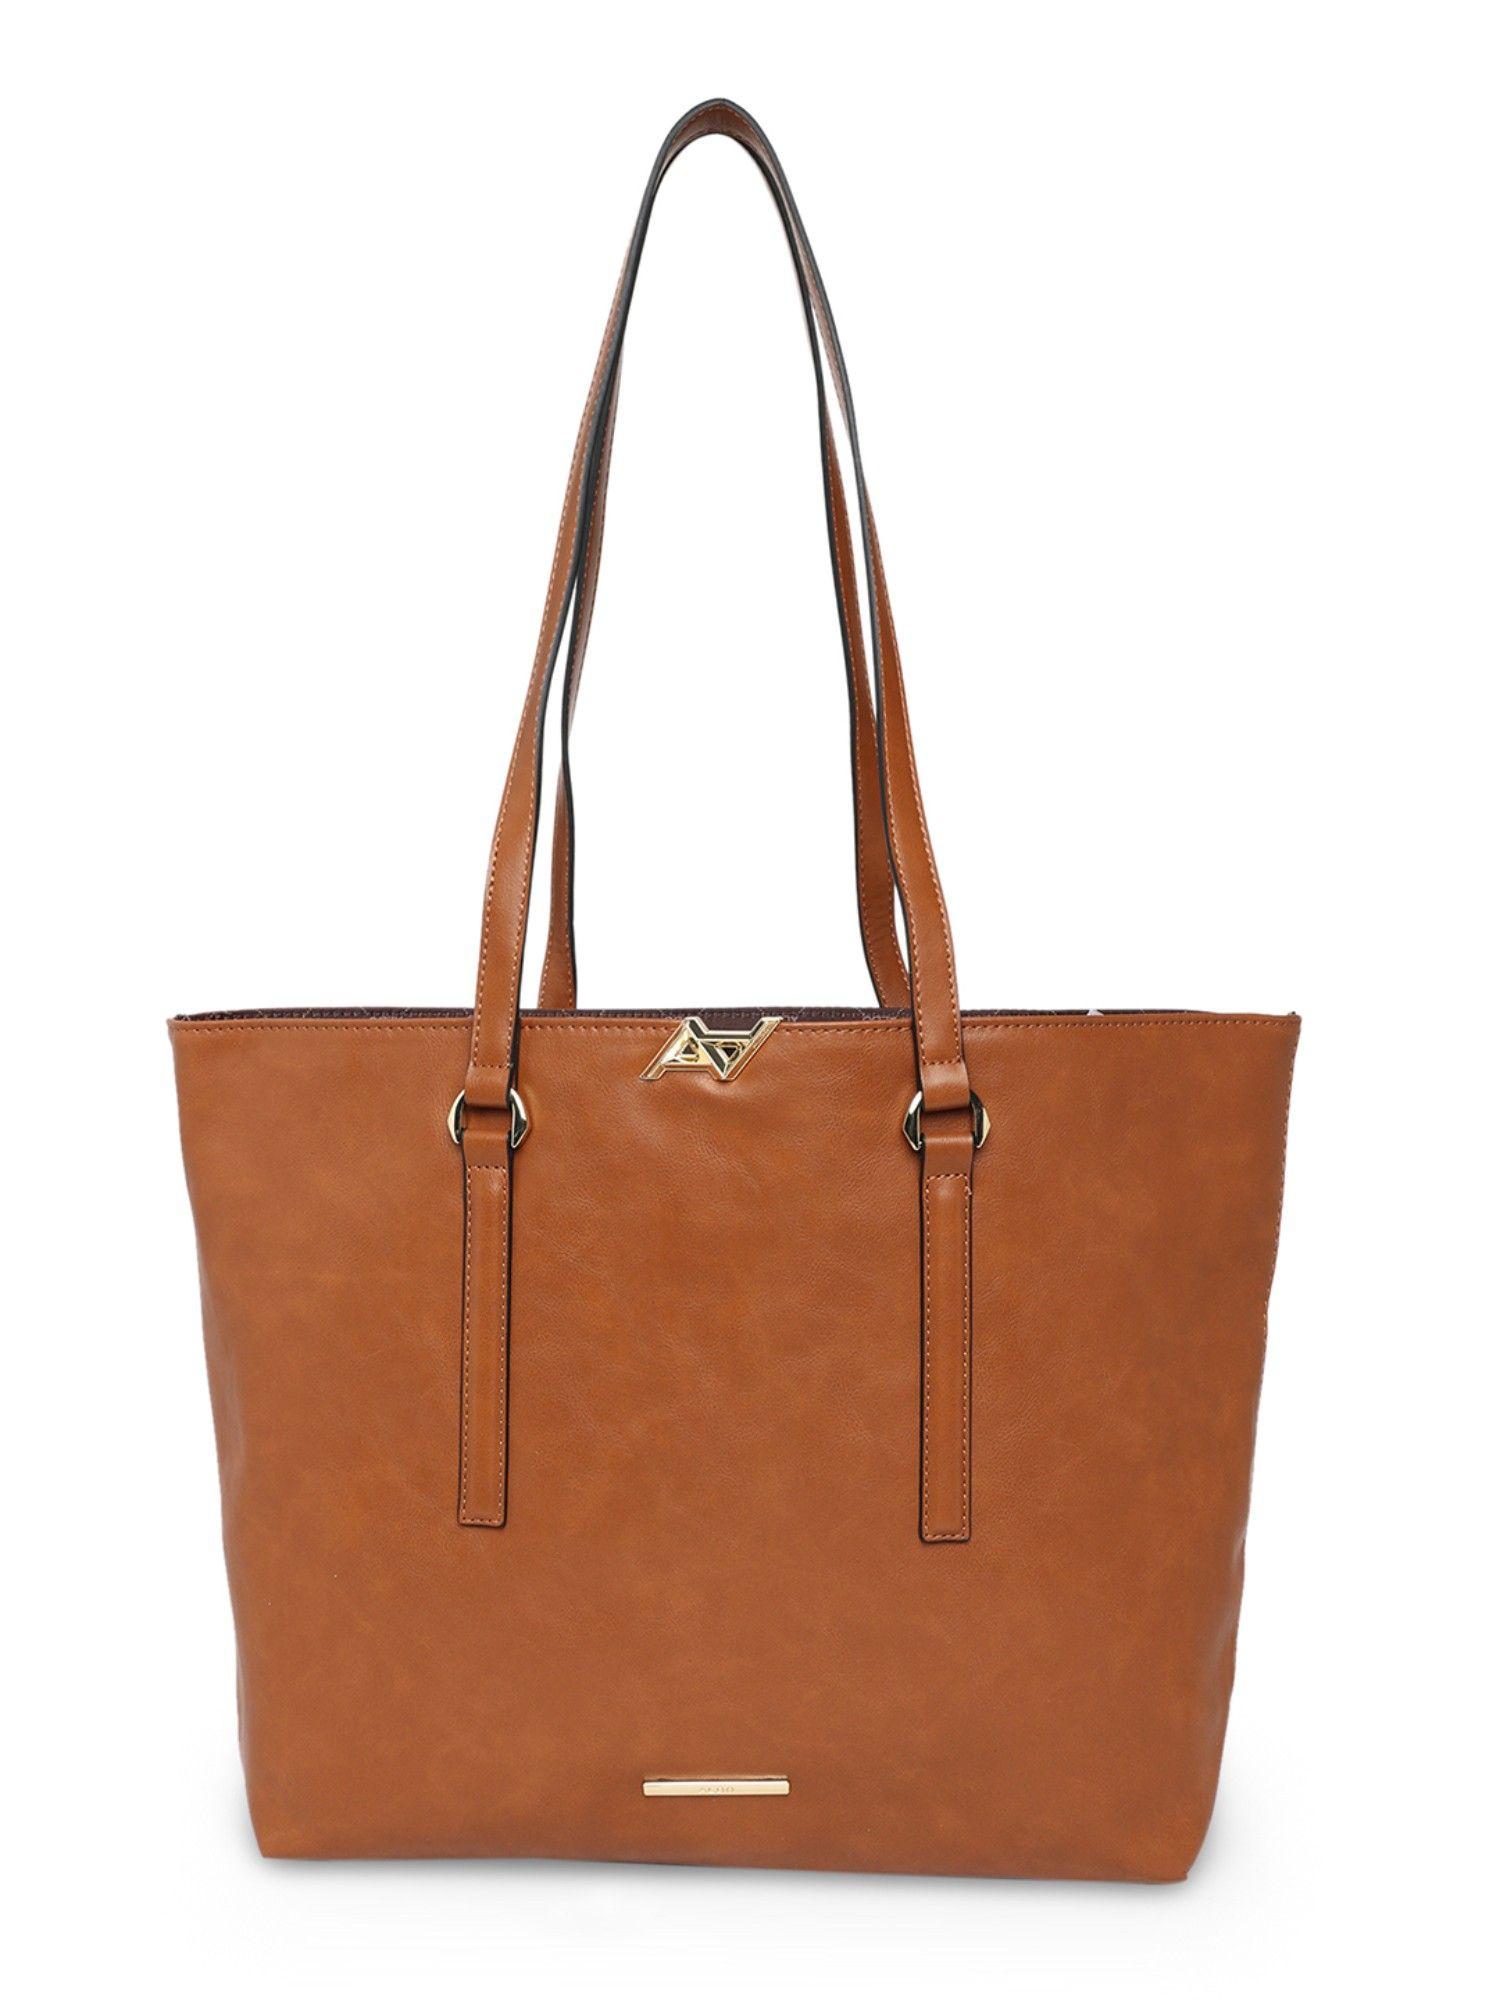 solid brown tote bag